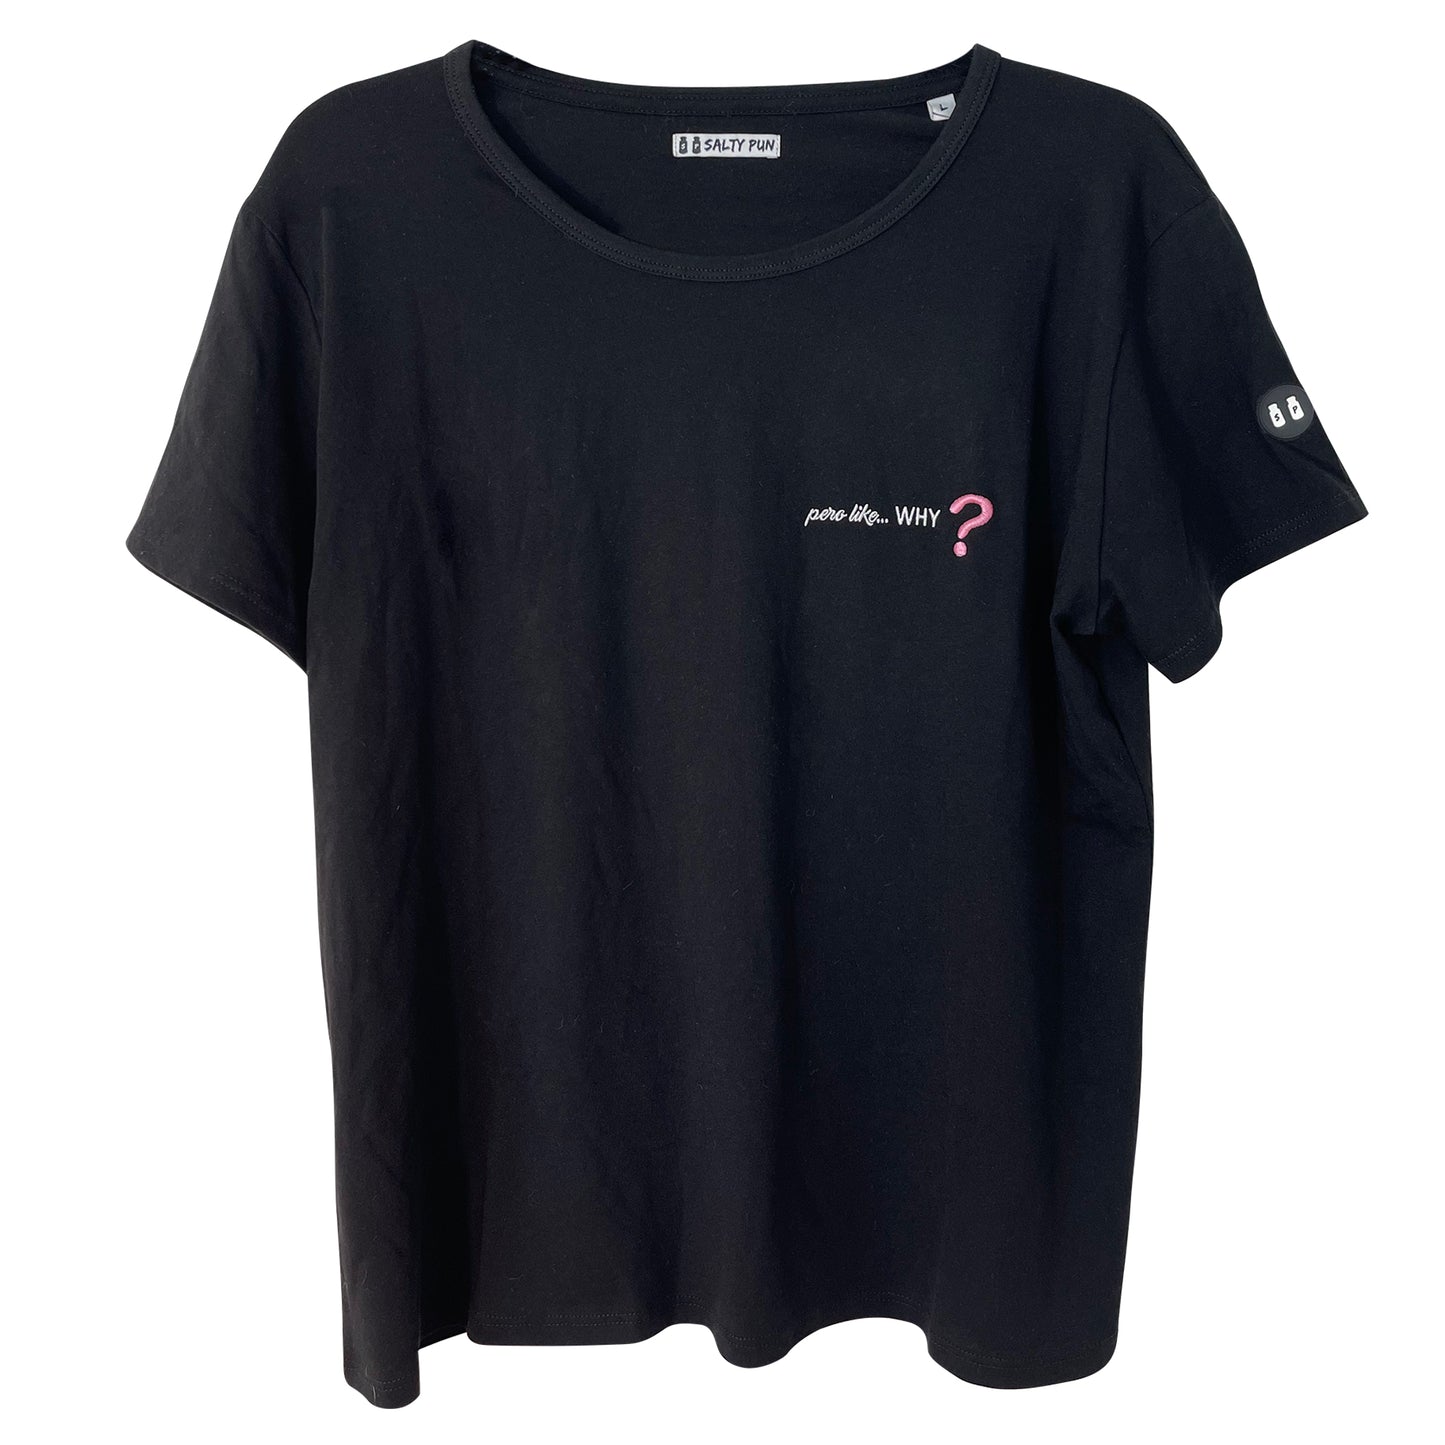 Women's T-Shirt - "Pero like why?"